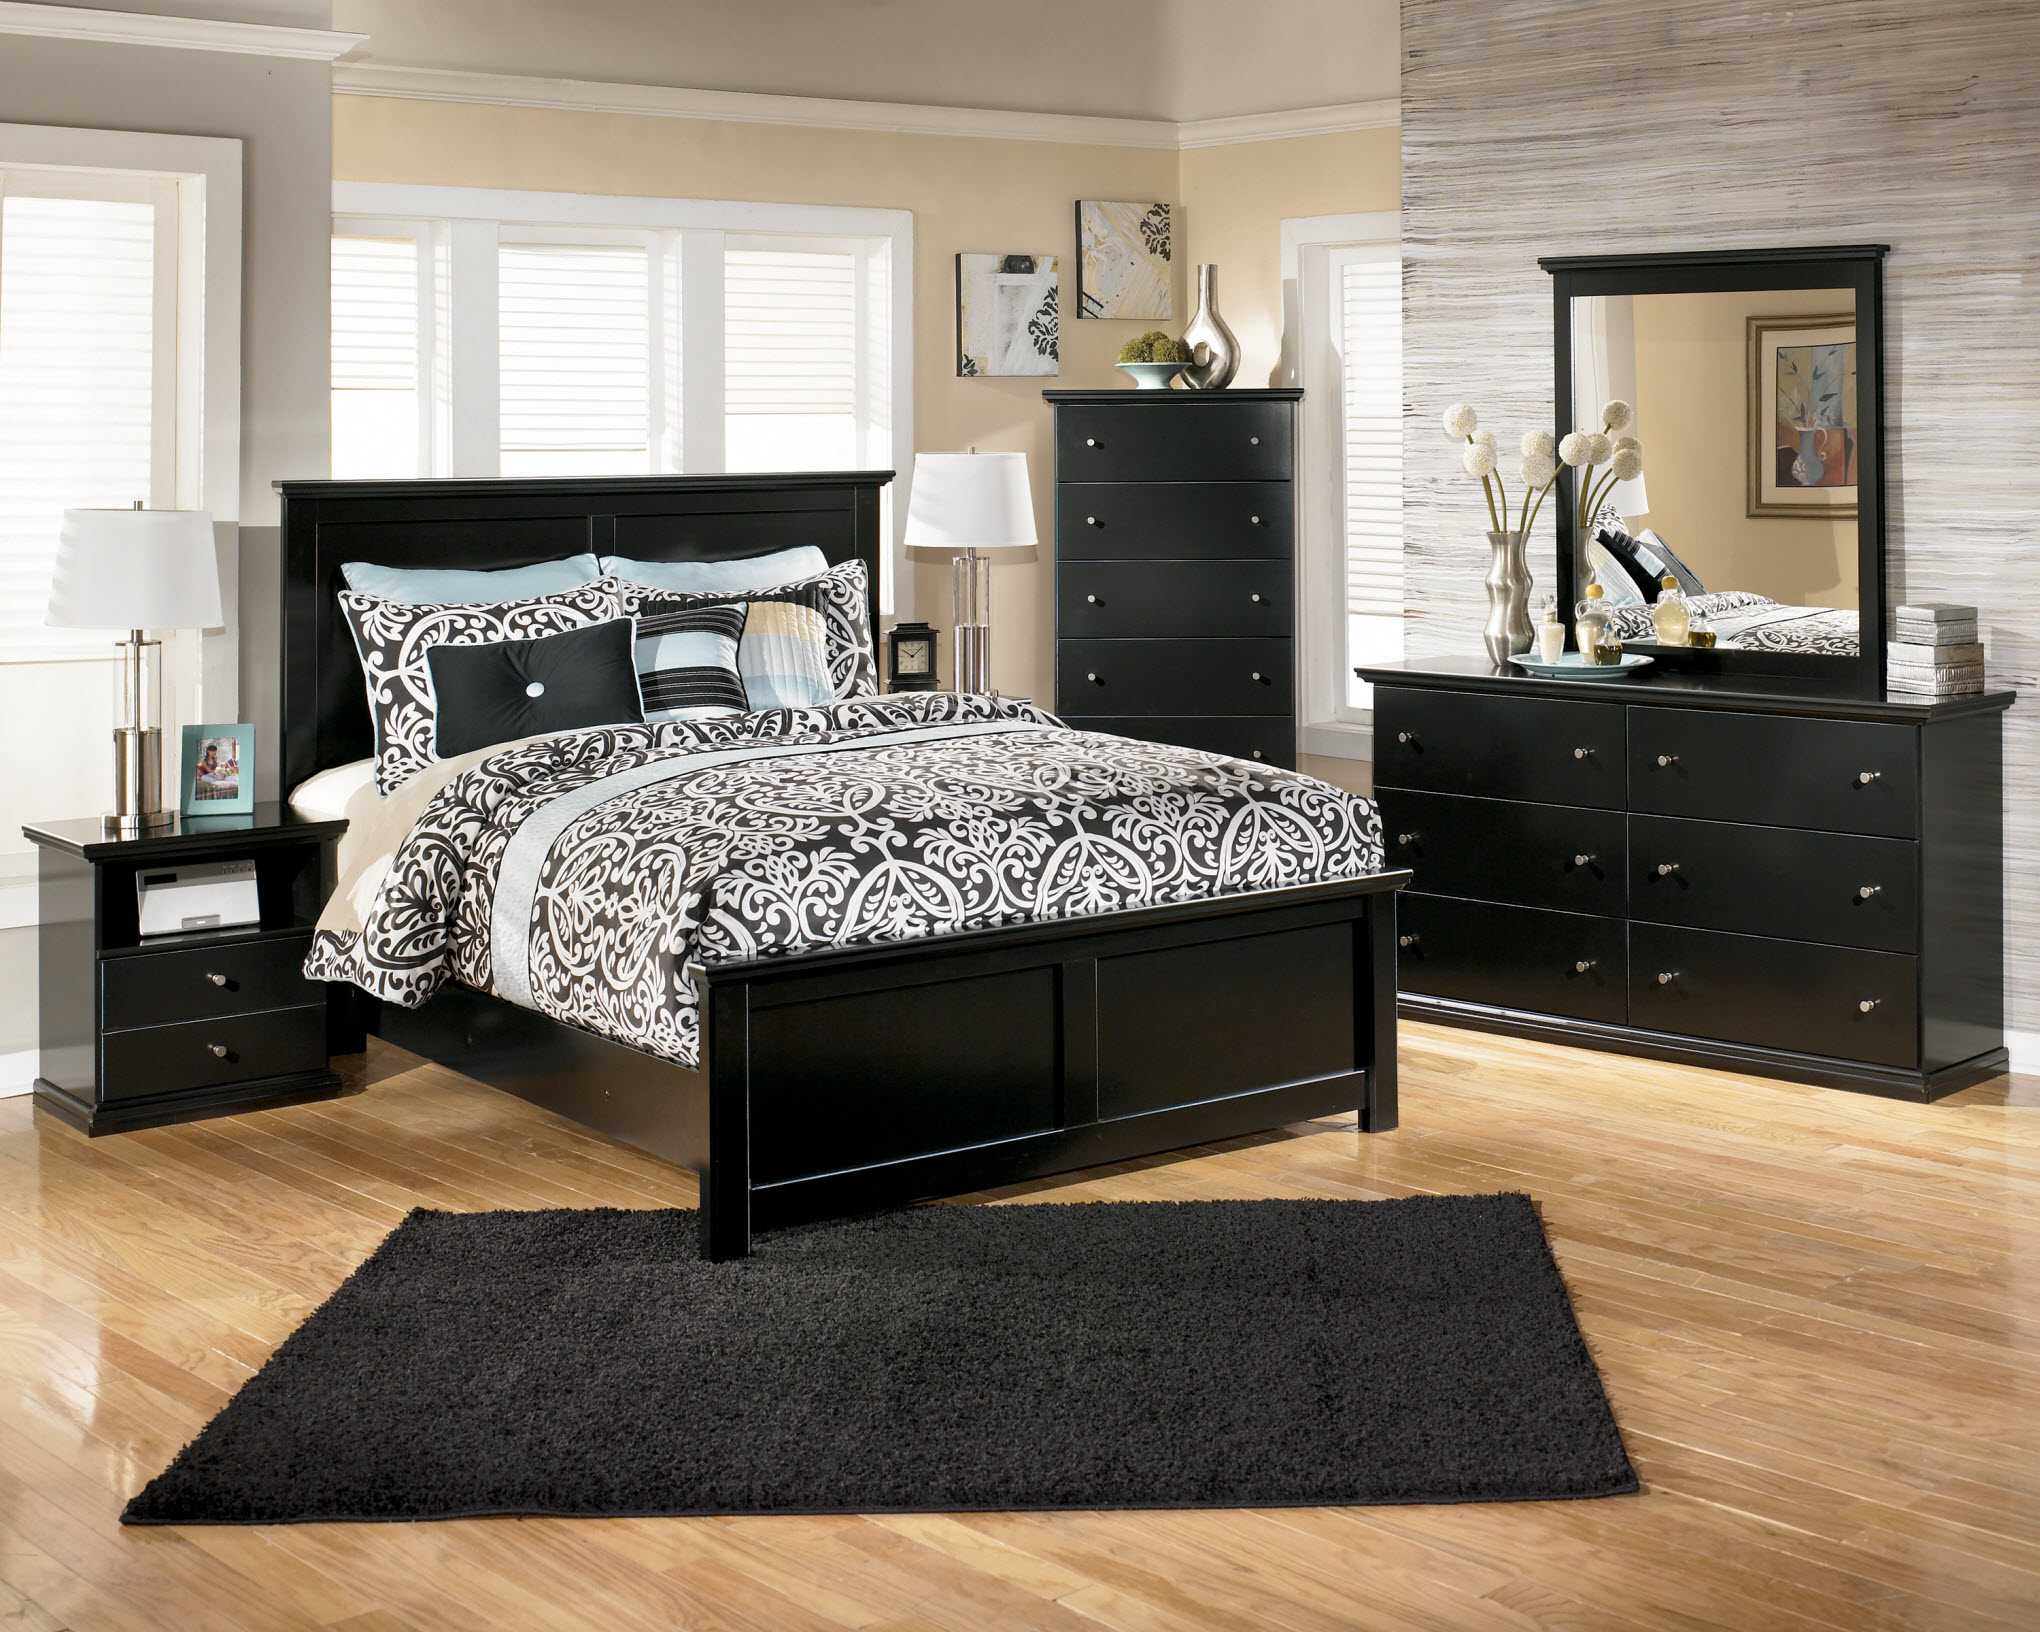 black bedroom furniture what color walls photo - 9